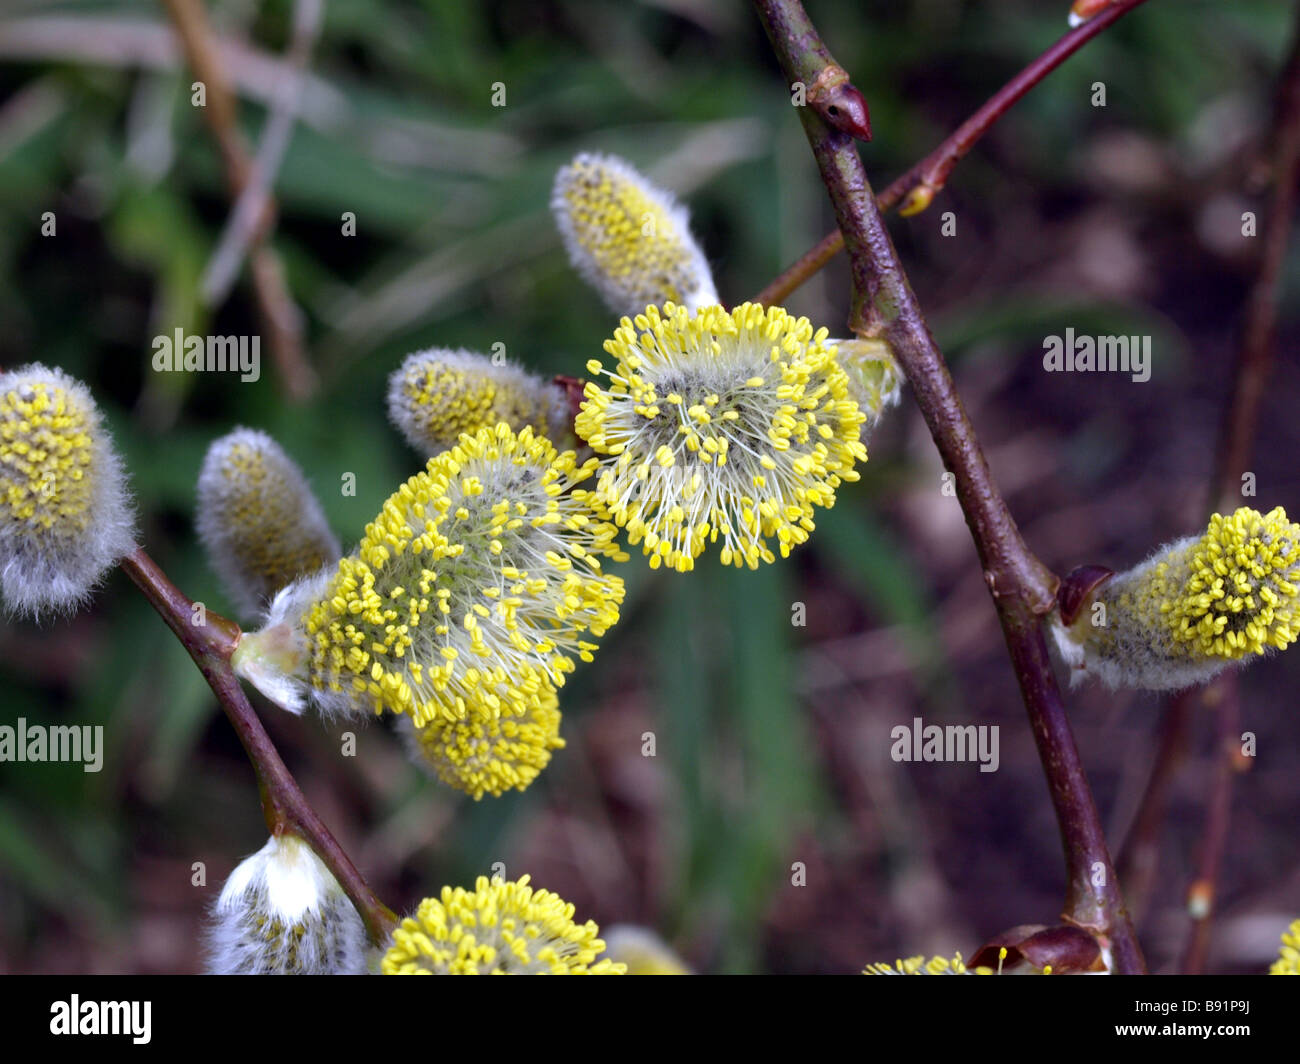 Salix caprea,willow catkins in flower. Stock Photo